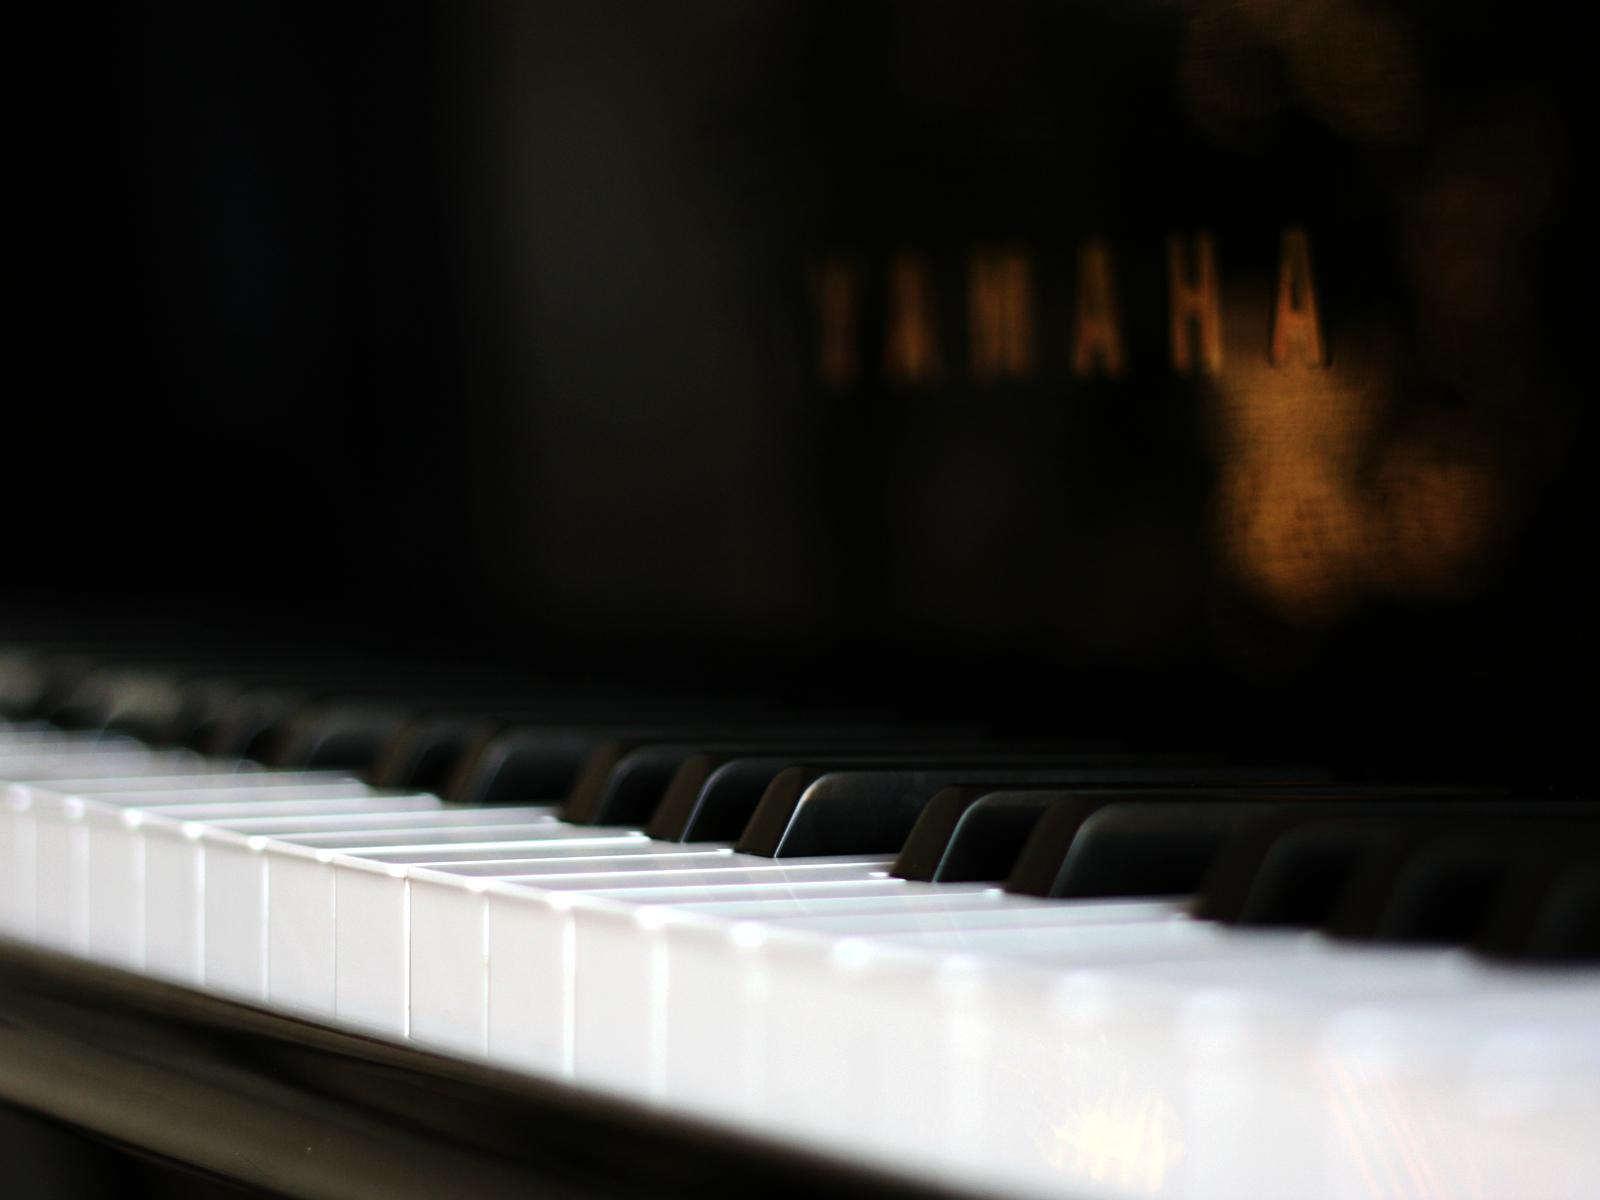 Yamaha Piano Keyboard Macro Photo HD Wallpaper Vvallpaper